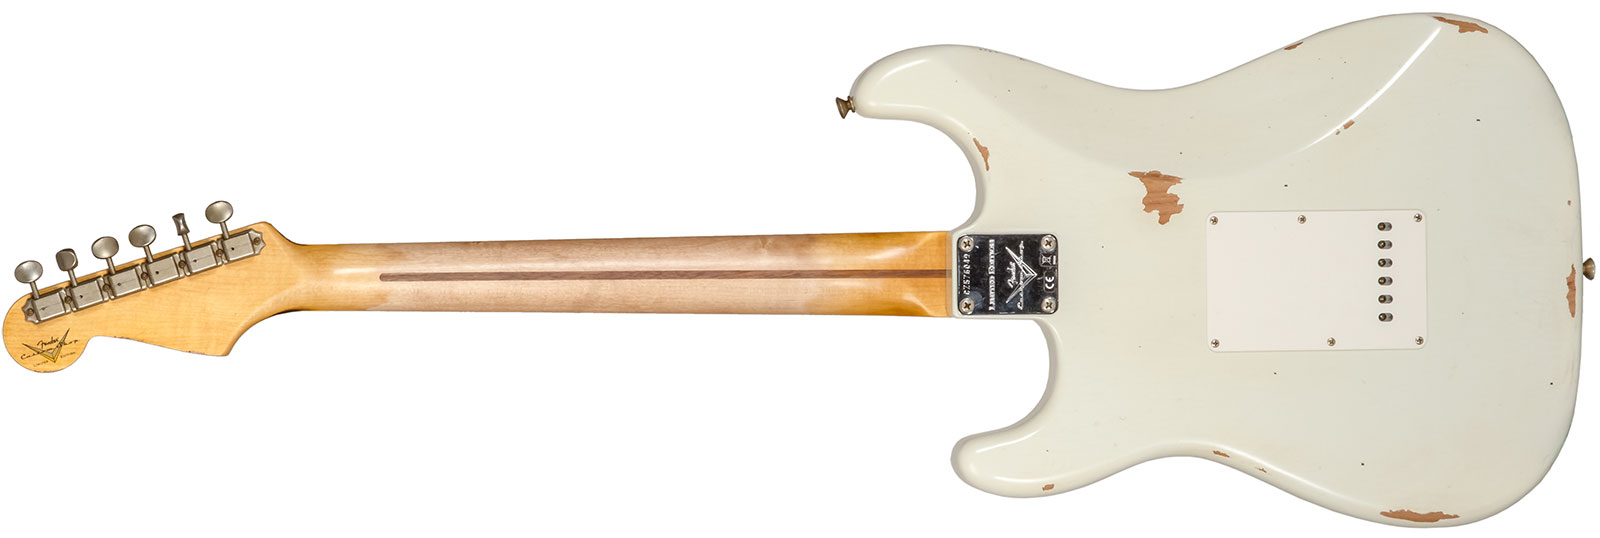 Fender Custom Shop Strat Fat 50's 3s Trem Mn #cz570495 - Relic India Ivory - E-Gitarre in Str-Form - Variation 1